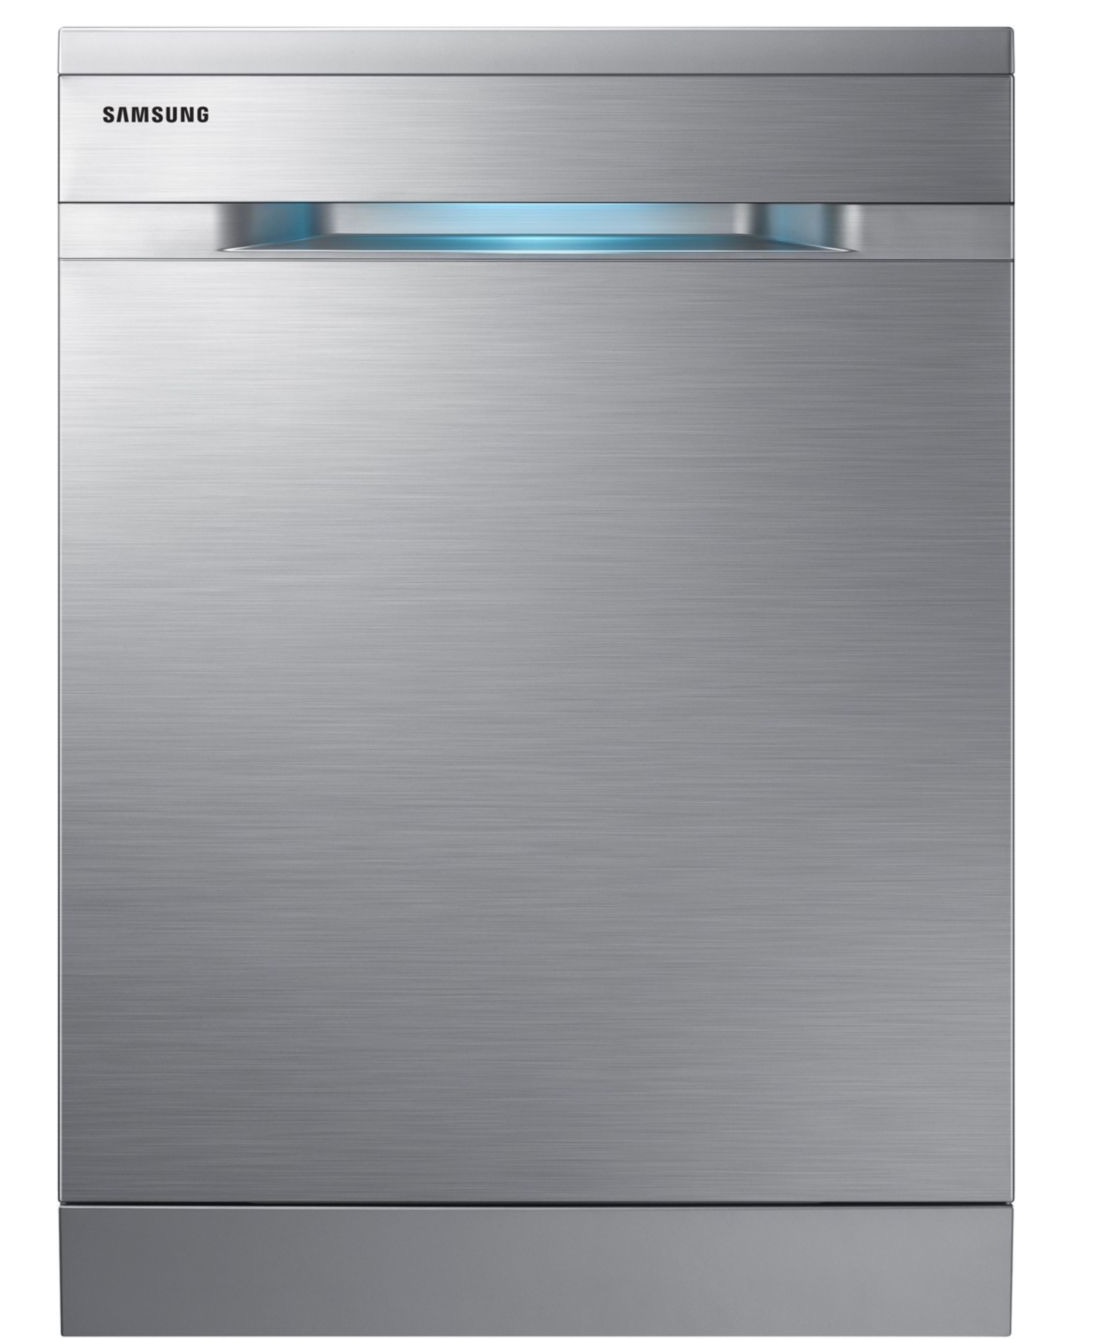 Lave vaisselle silencieux SAMSUNG Waterwall DW60M9550FS à 999€